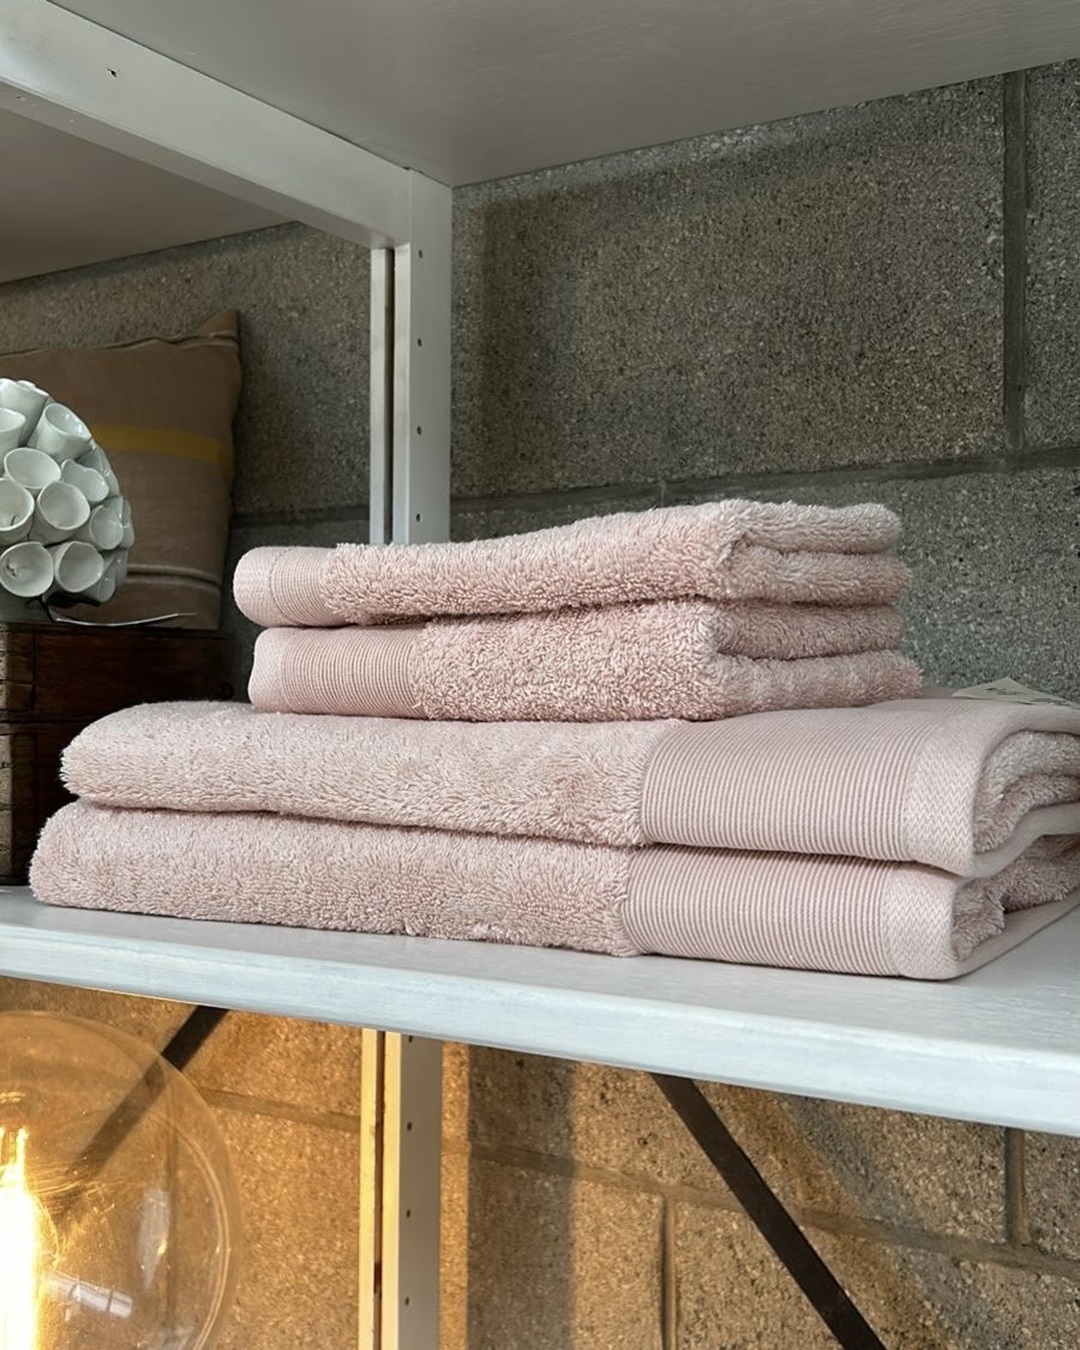 Pink bath towels and hand towels on shelf